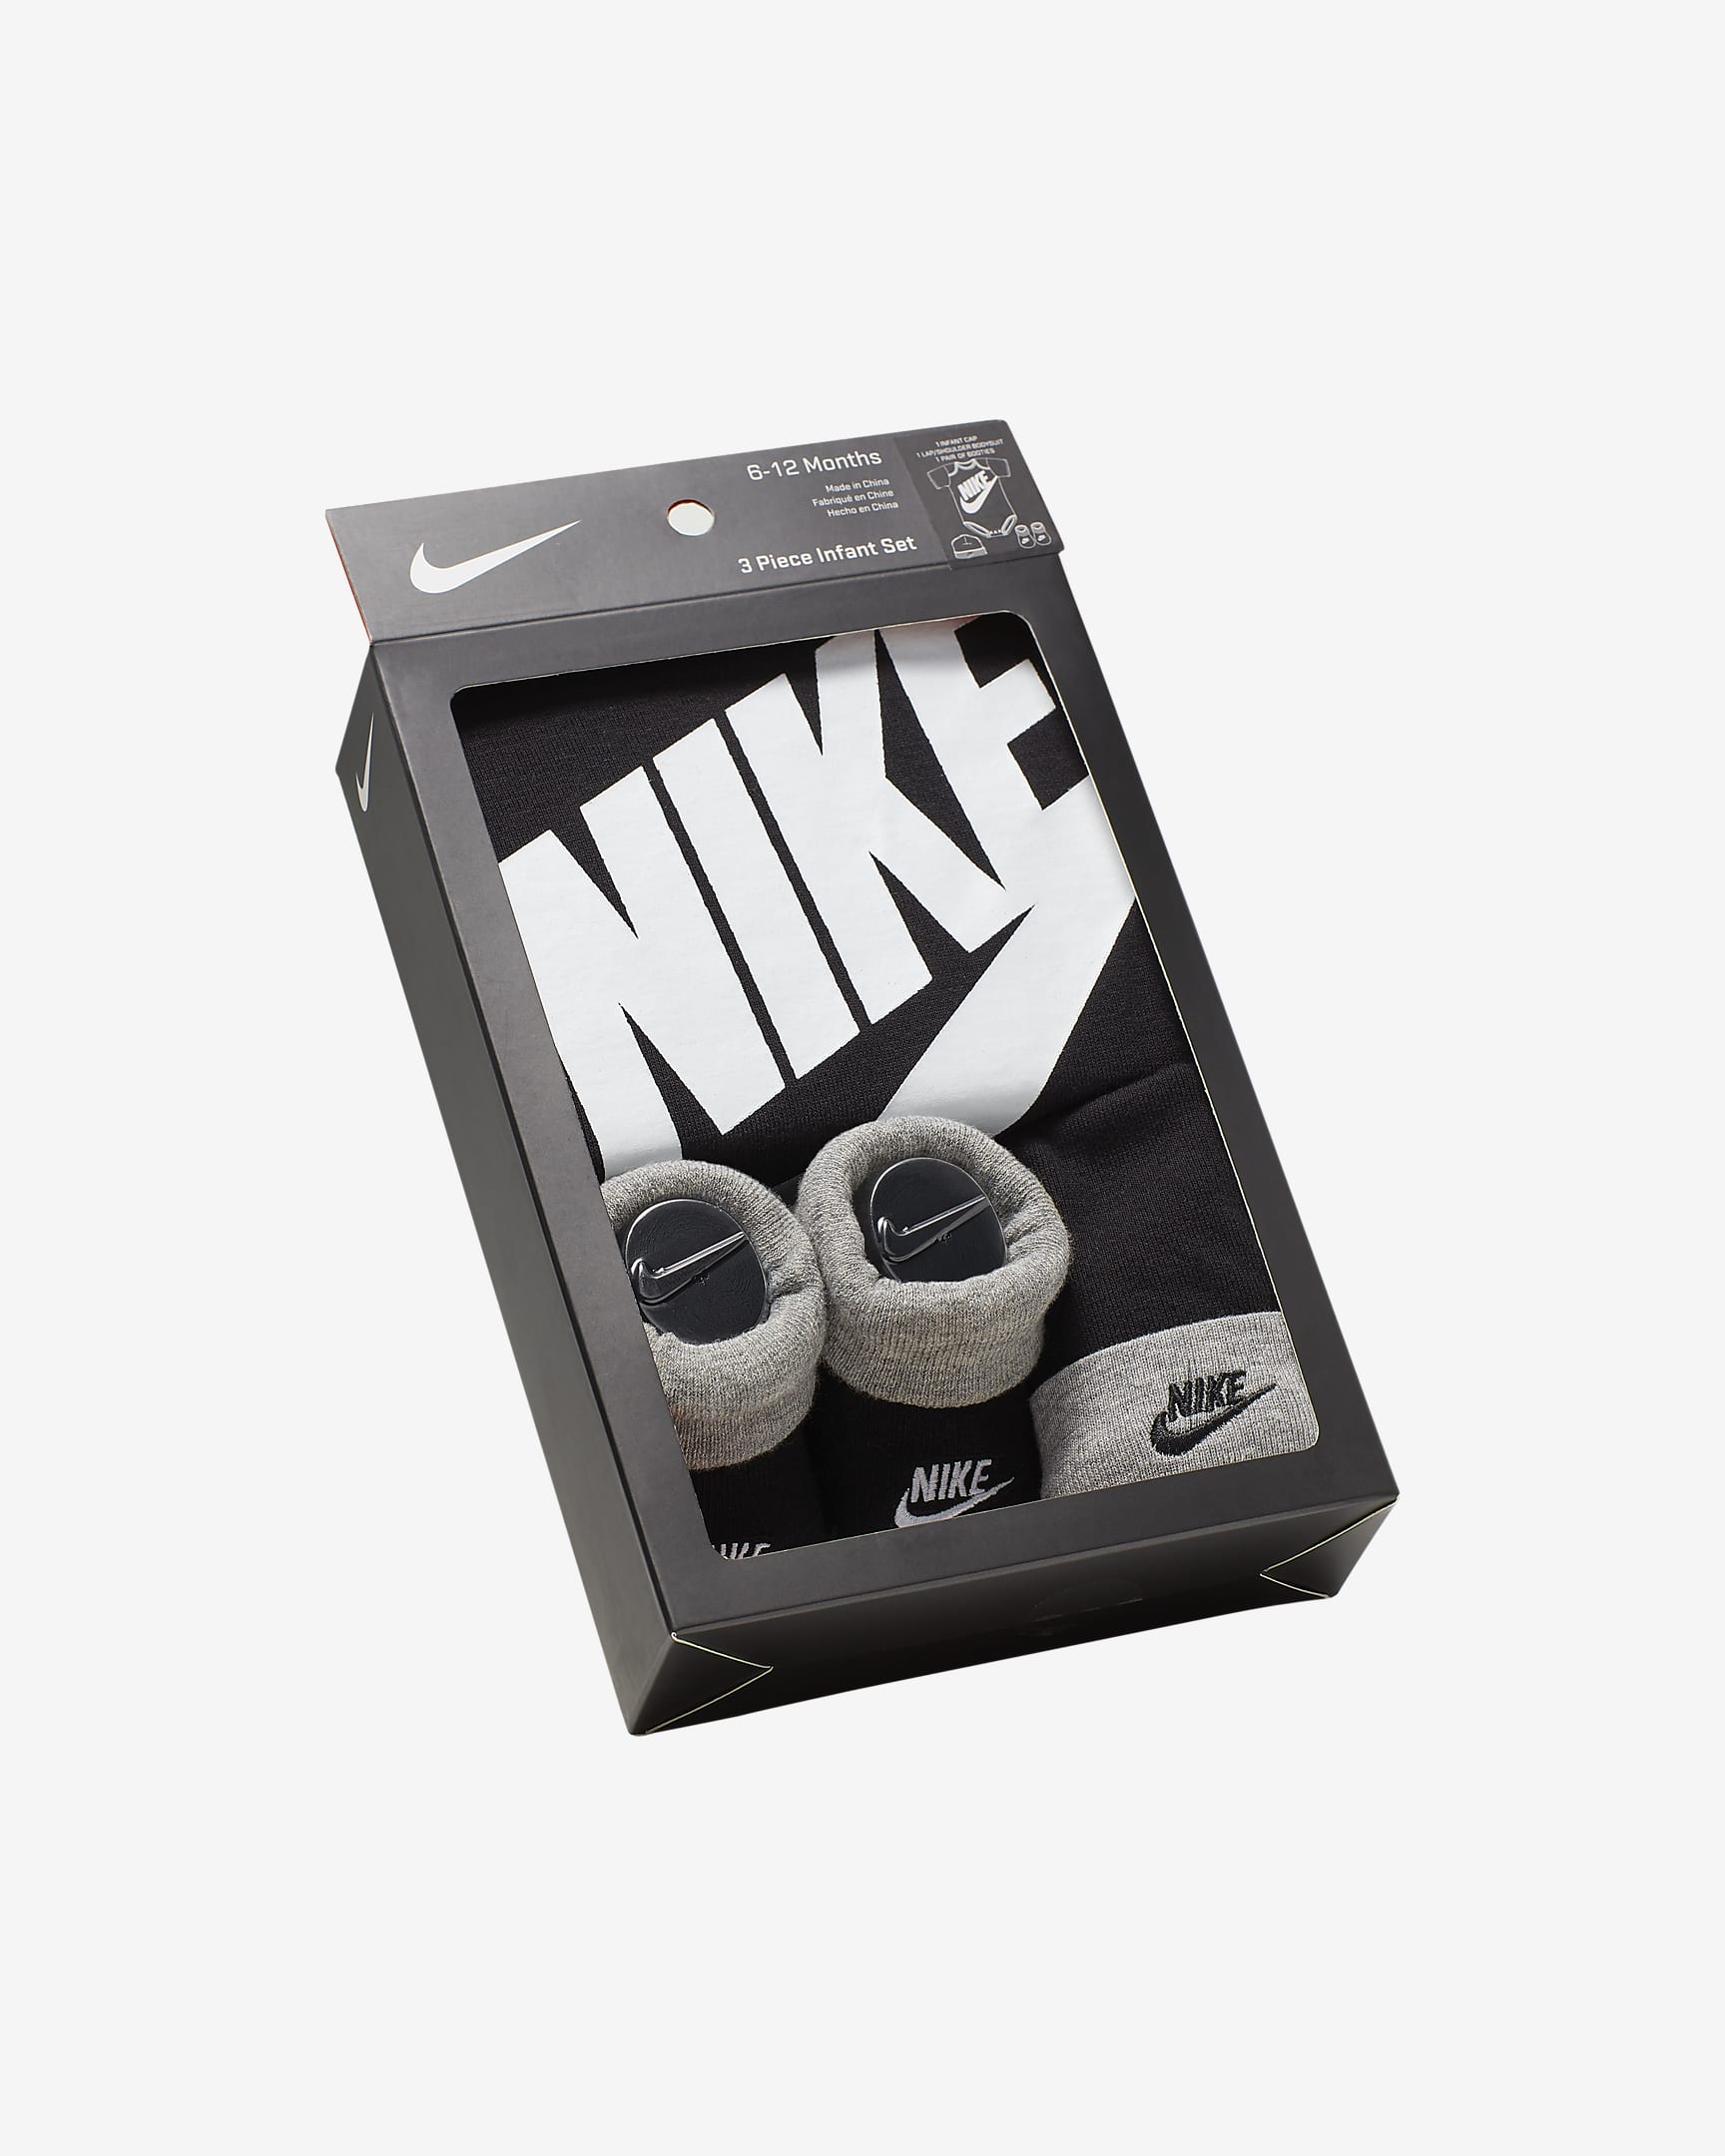 Nike Baby Set - White/Black/Grey